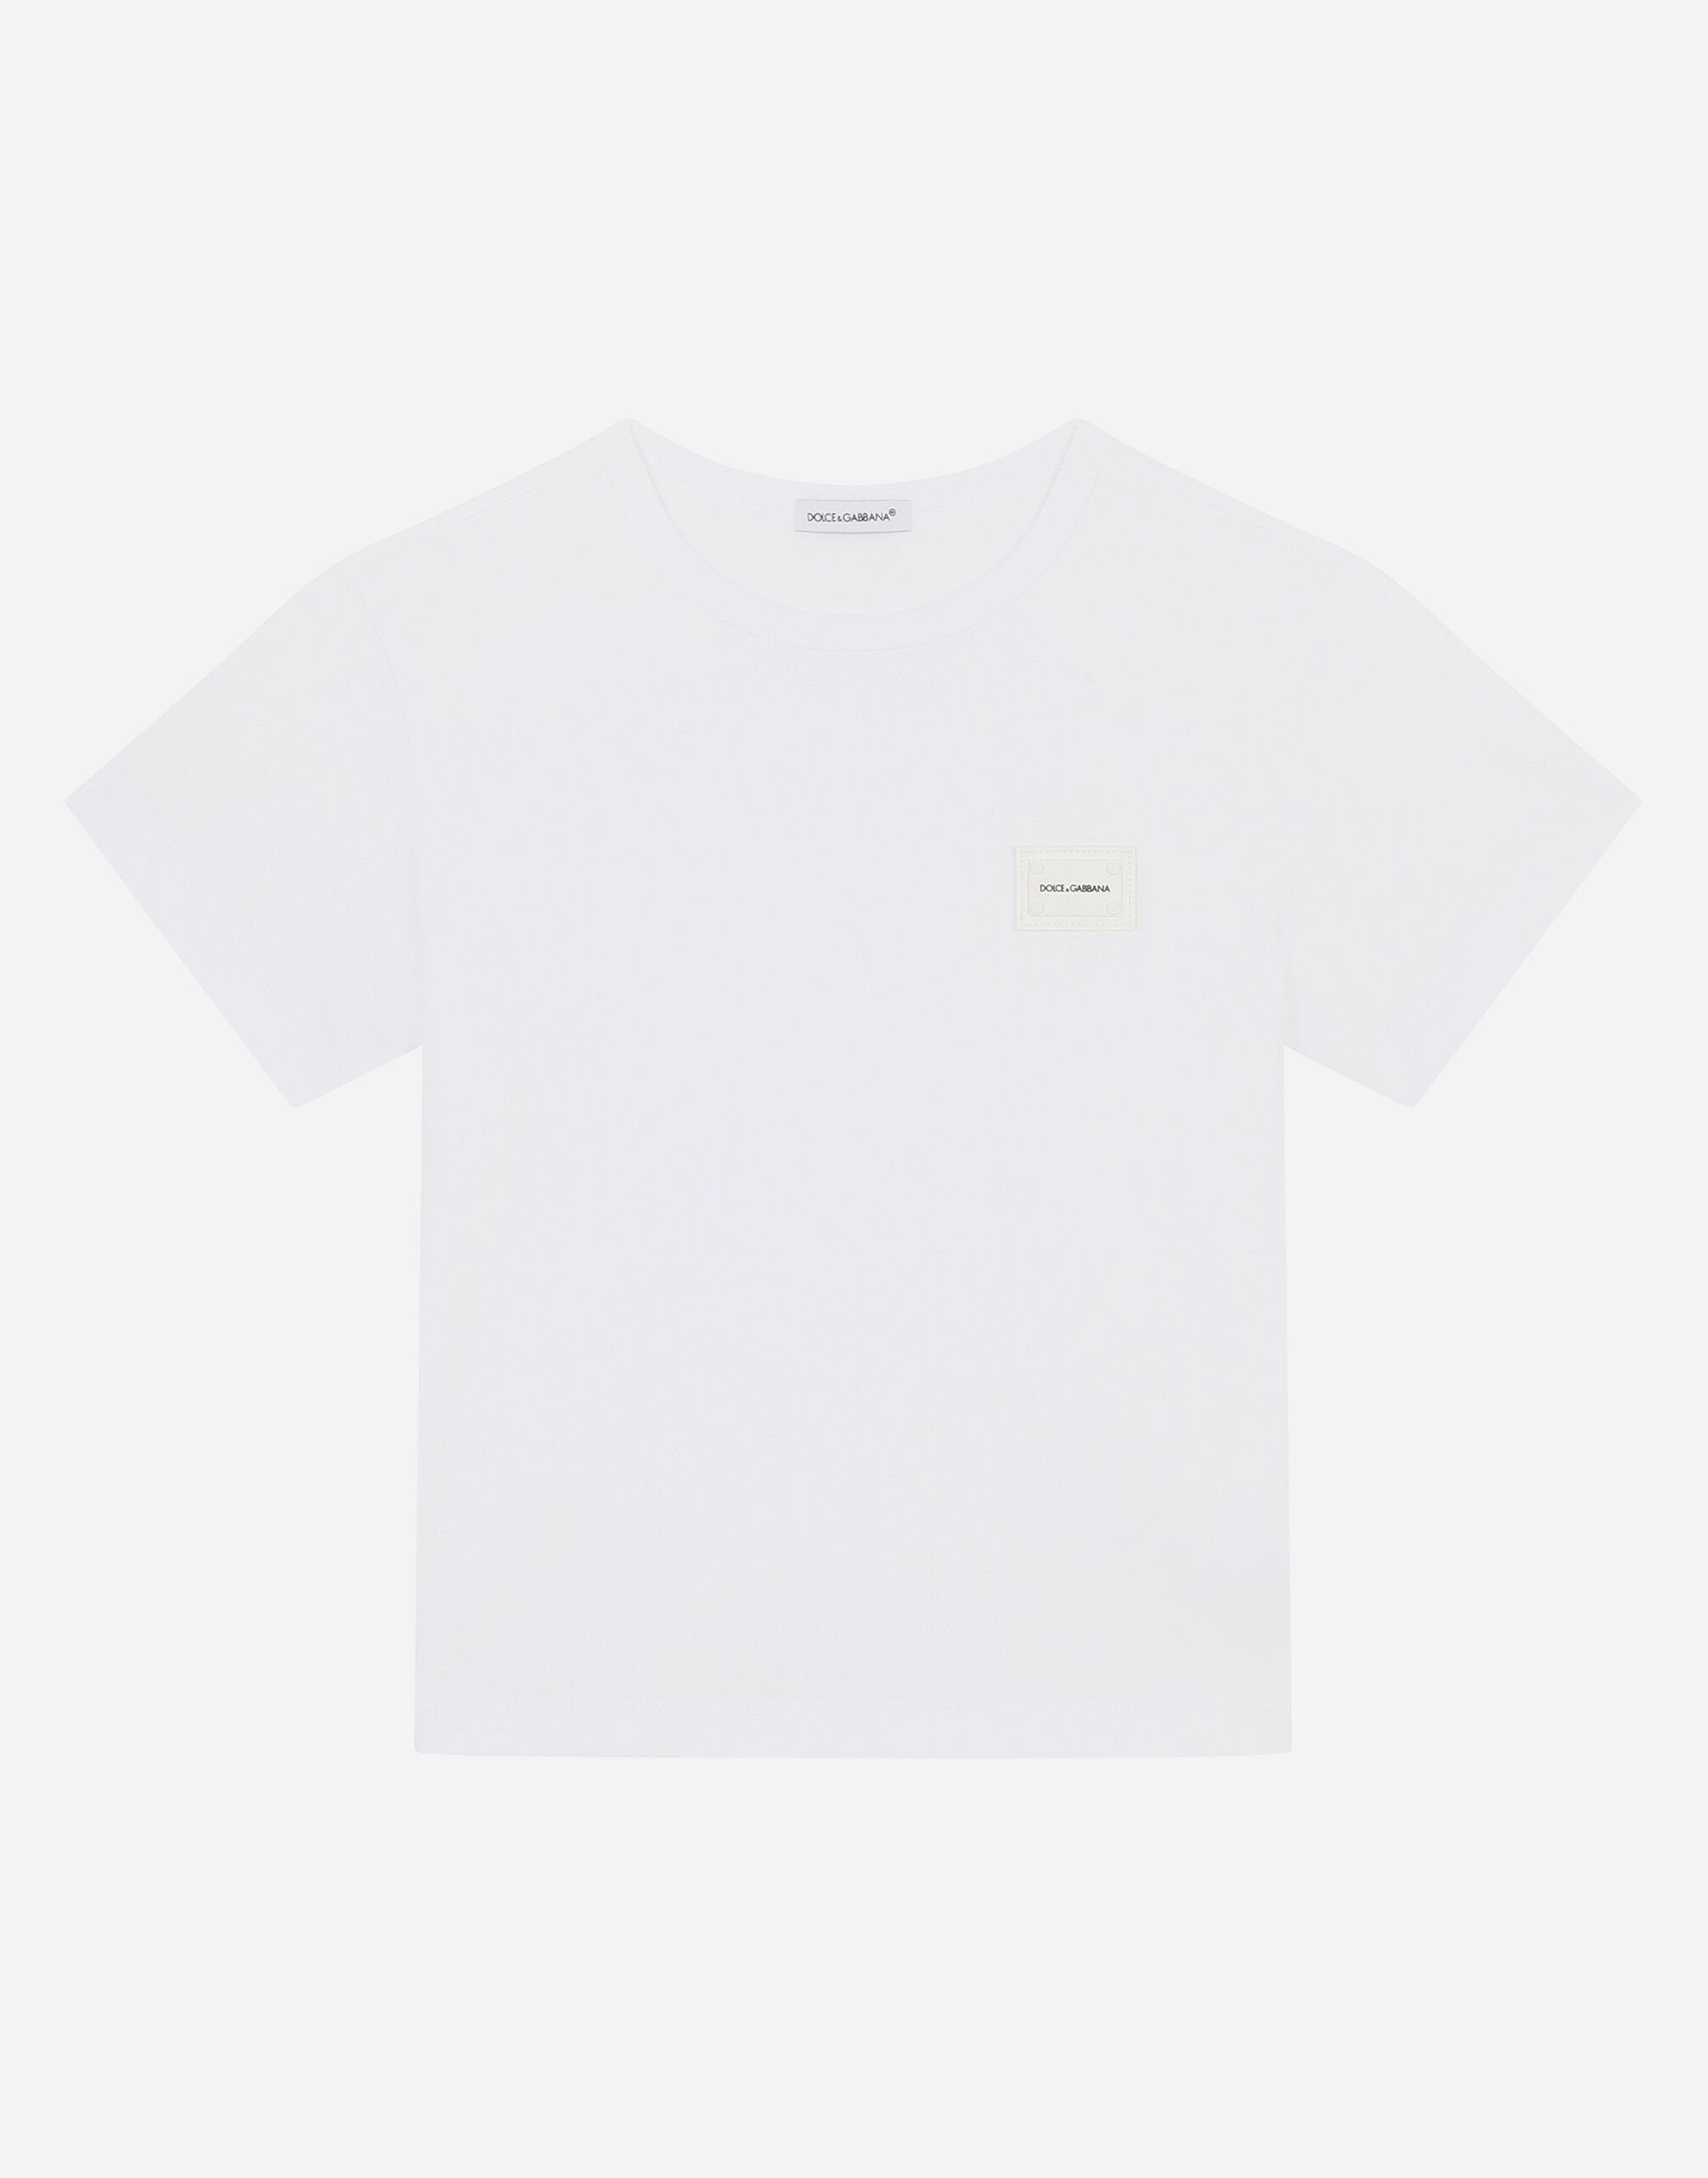 Dolce & Gabbana Jersey-t-shirt mit logoplakette SILBER L52DH1G7VXC